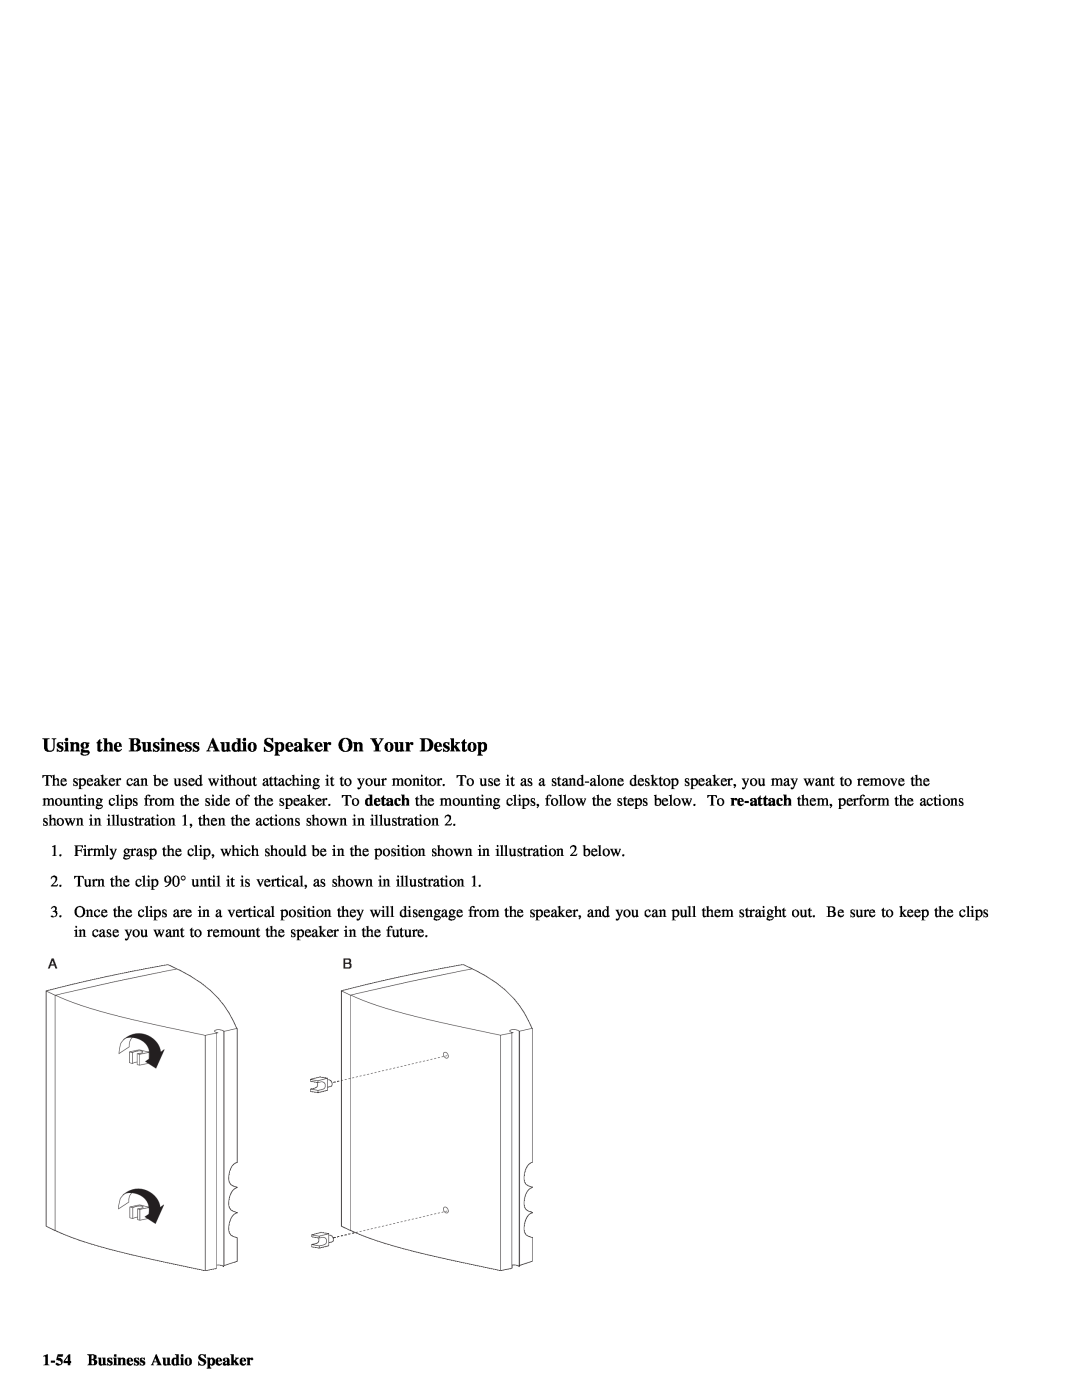 IBM 05L1596 manual 1-54Business Audio Speaker, Your, Using 